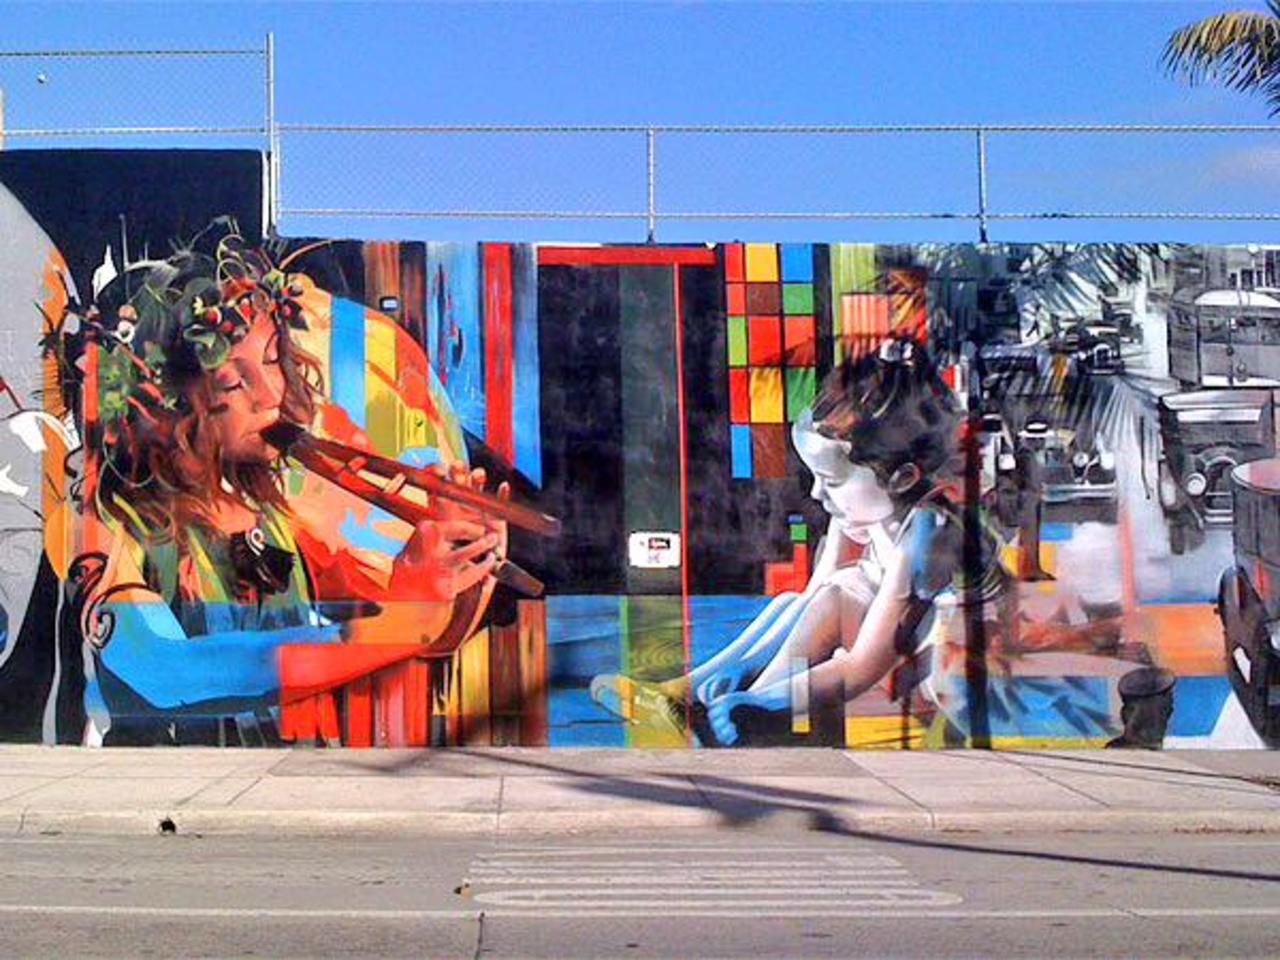 Eduardo Kobra
Miami
#streetart #art #graffiti #mural http://t.co/8FnWR5fQ4c